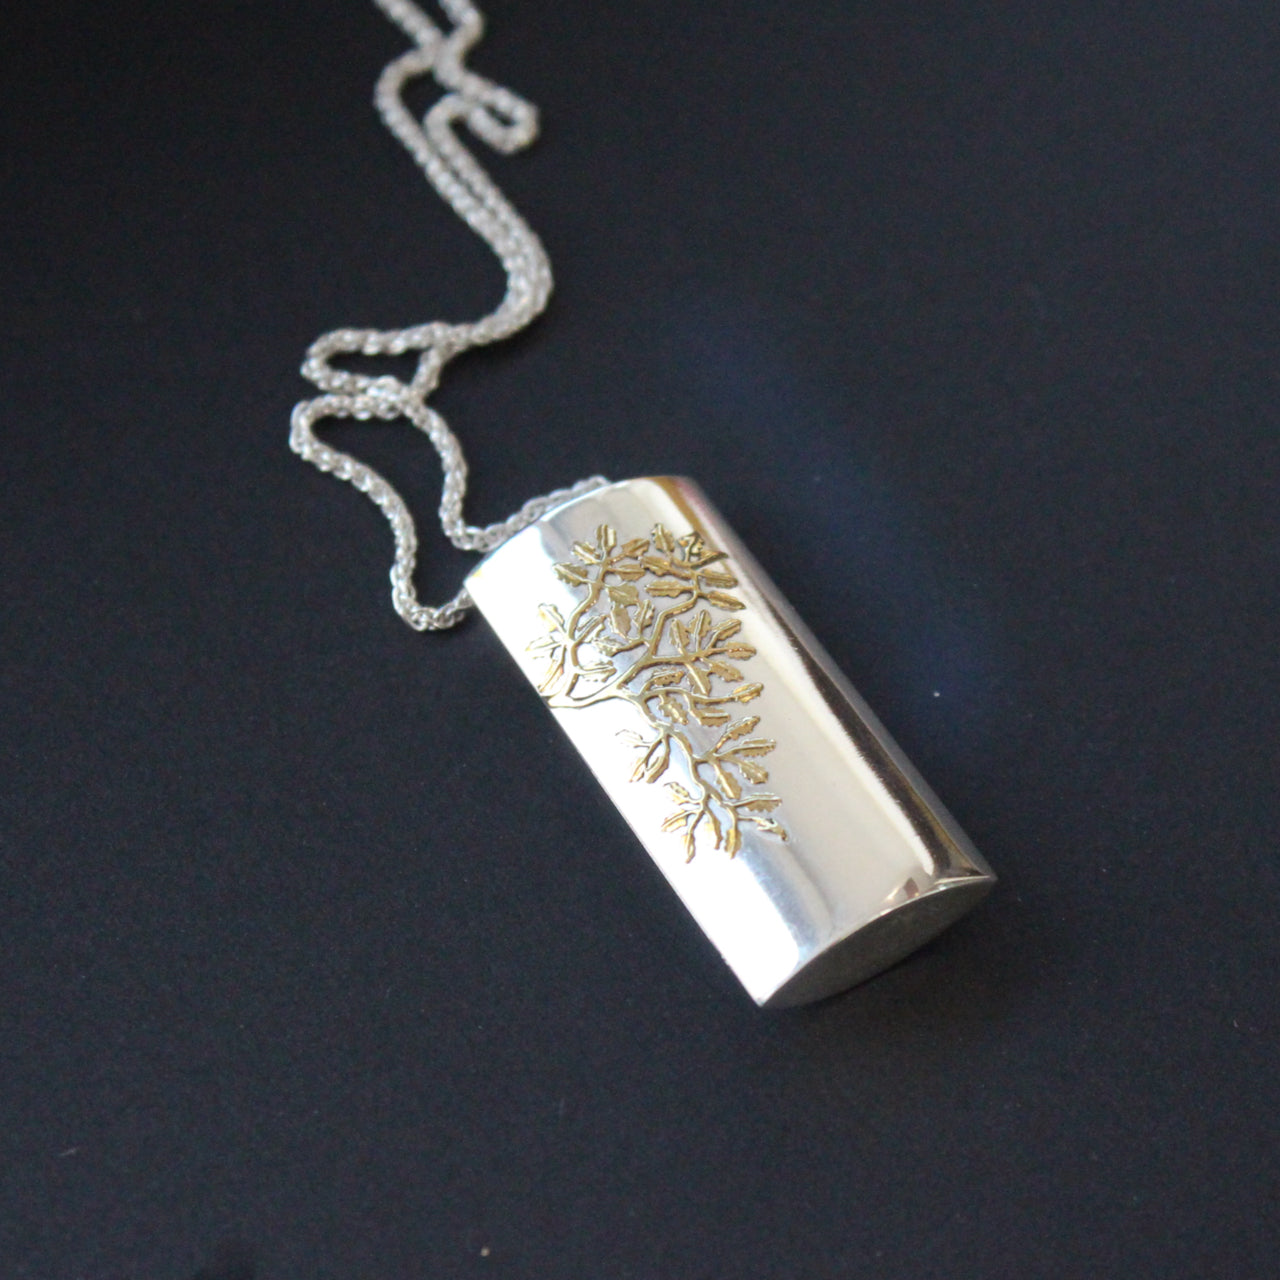 Silver box pendant with flower design by UK artist Beverly Bartlett.